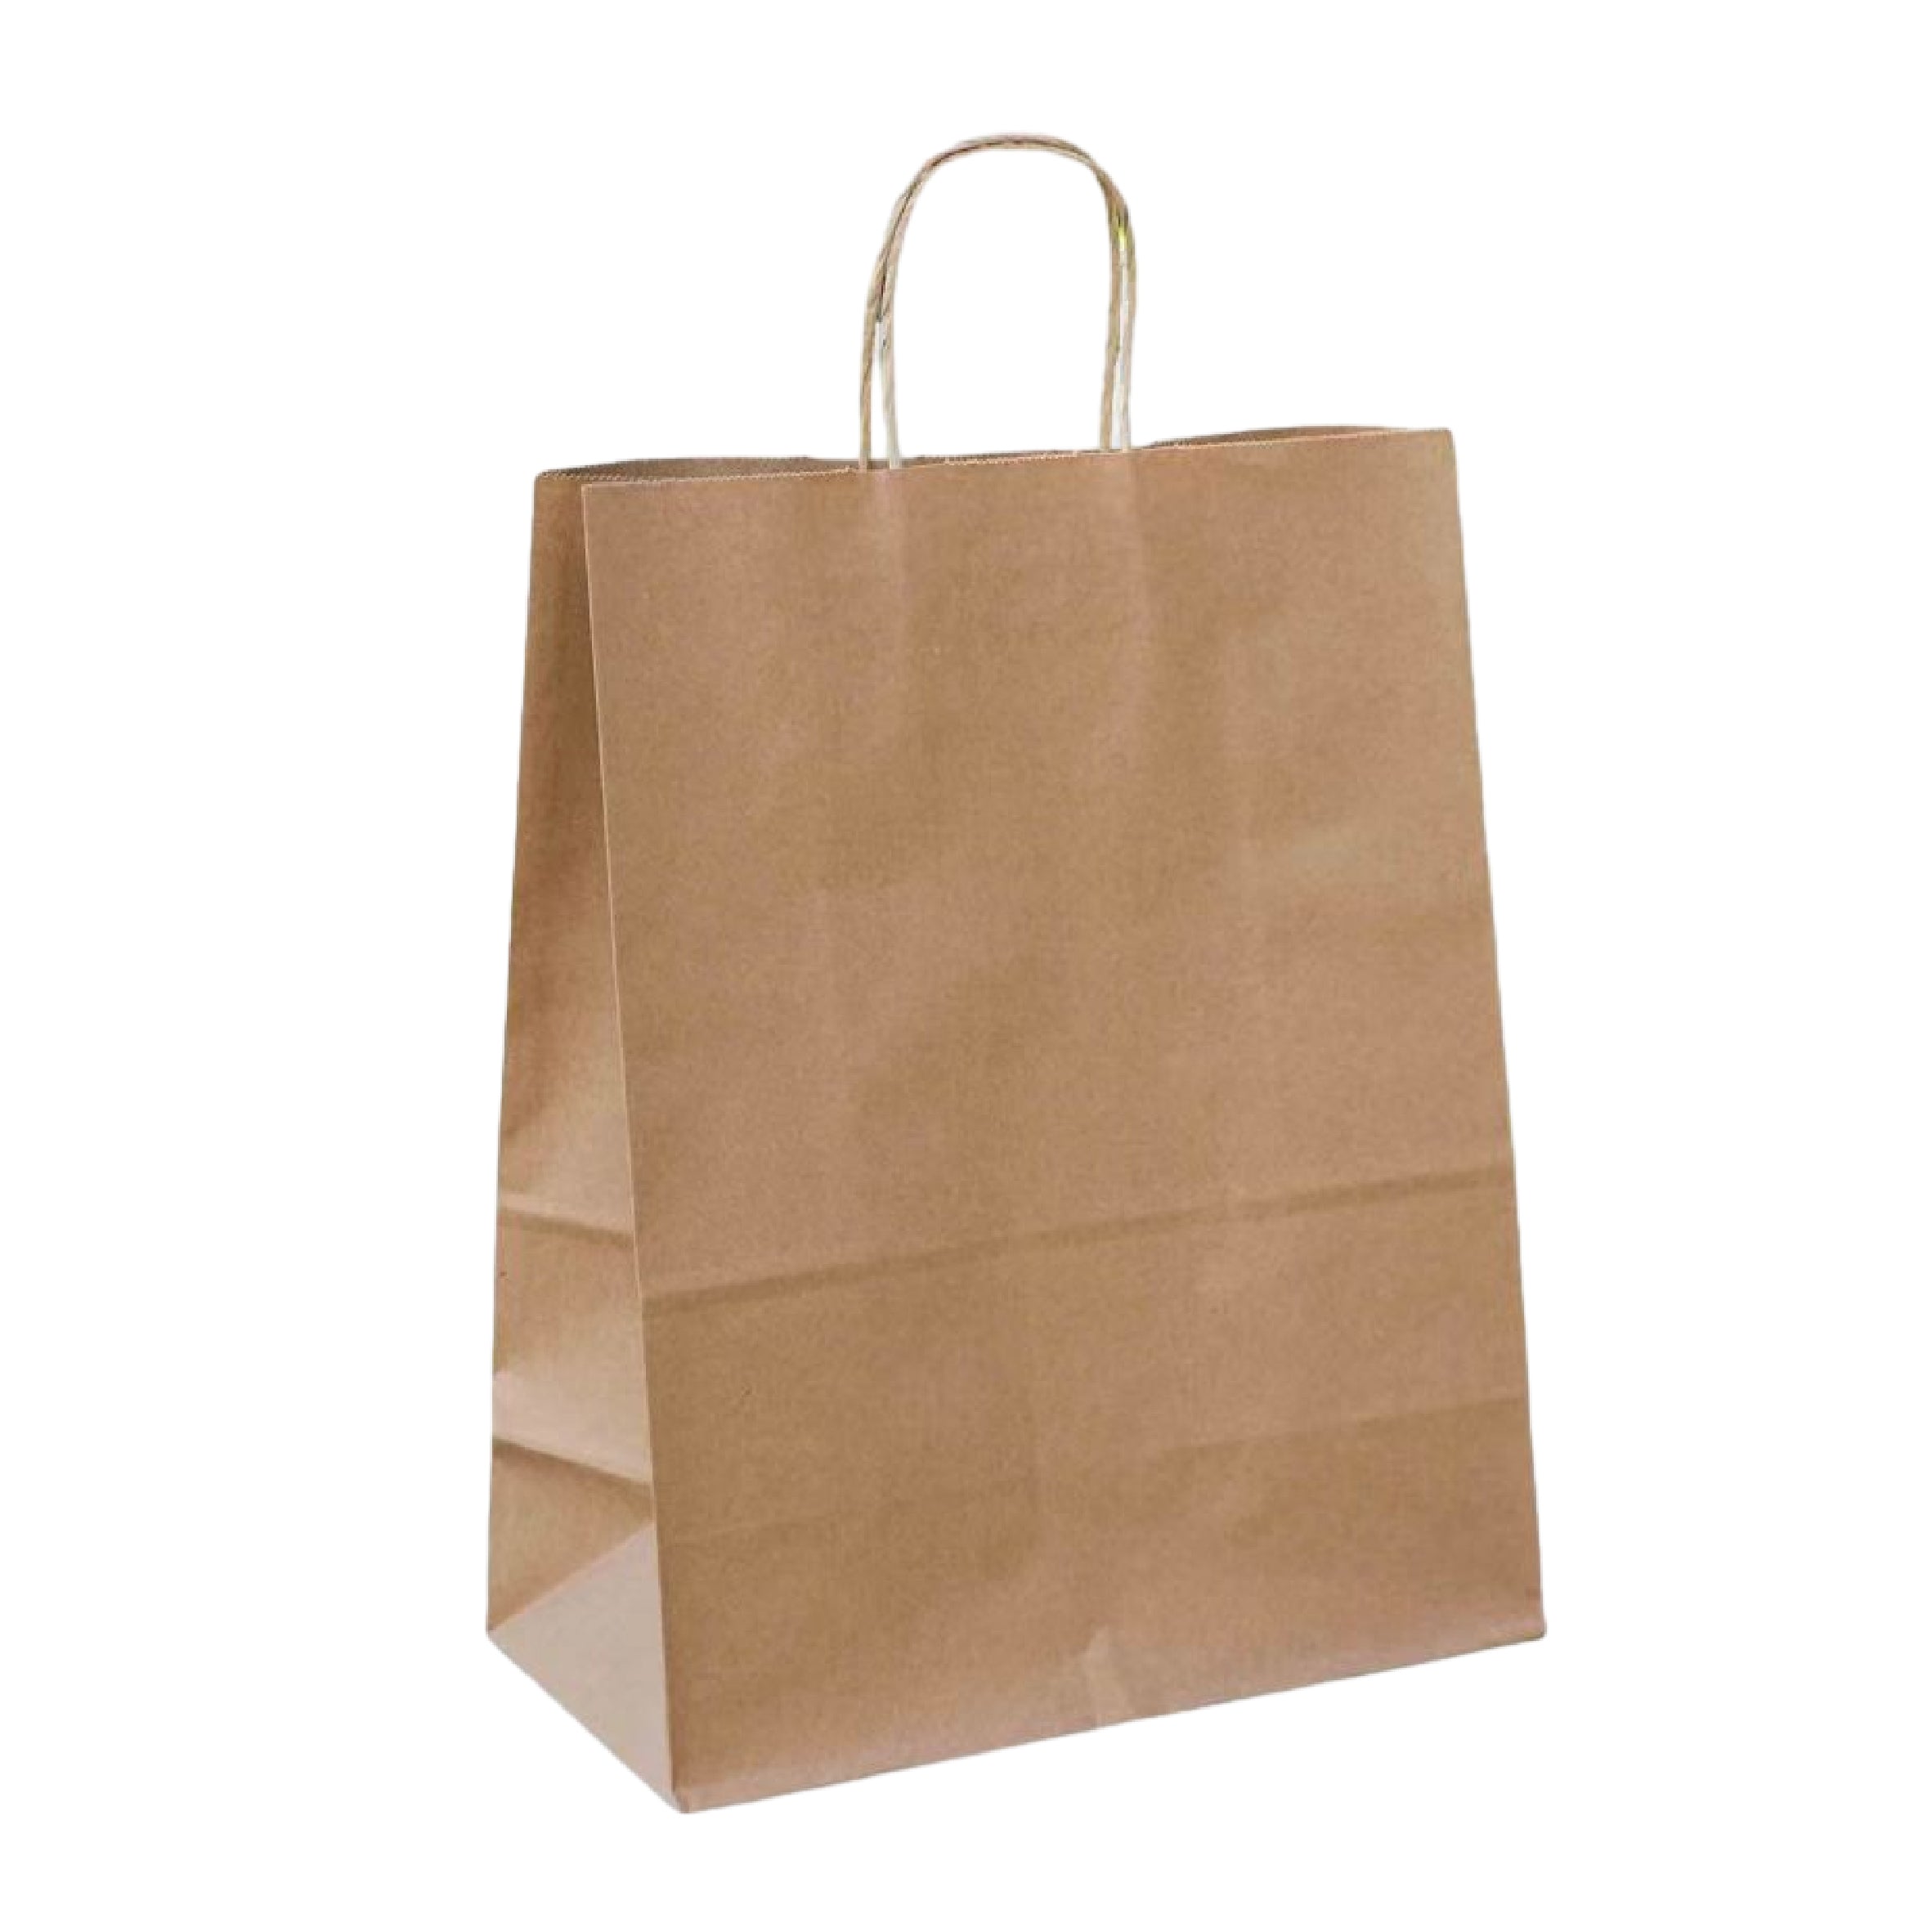 13.2 x 16.7 x 6.9 inch Paper Handle Shopping Bag